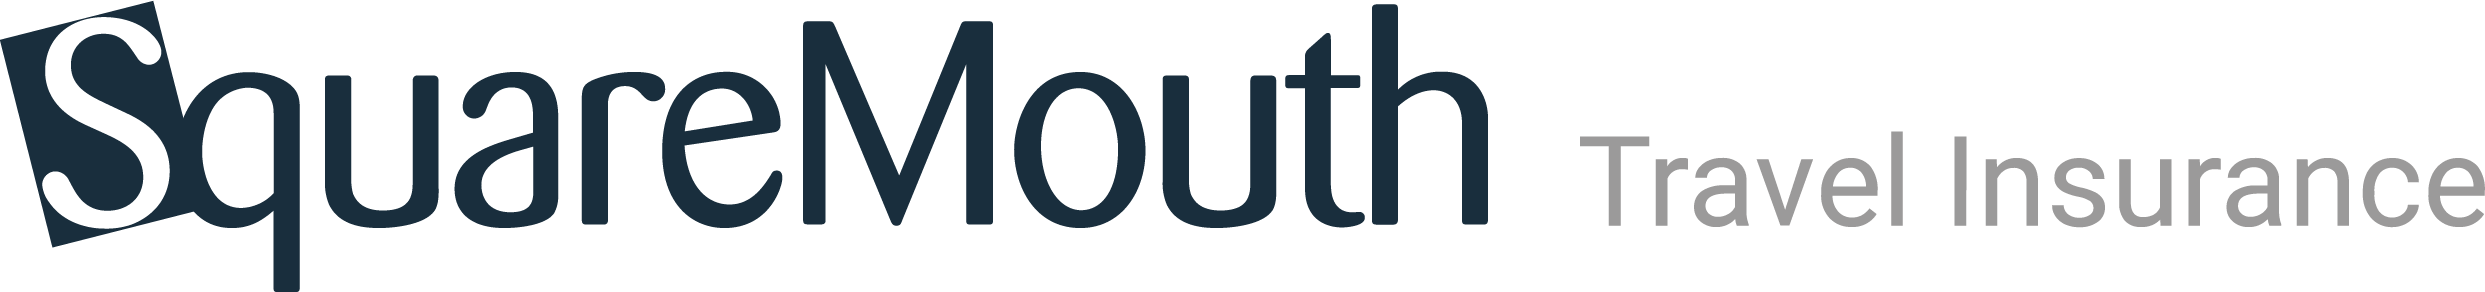 squaremouth travel insurance logo